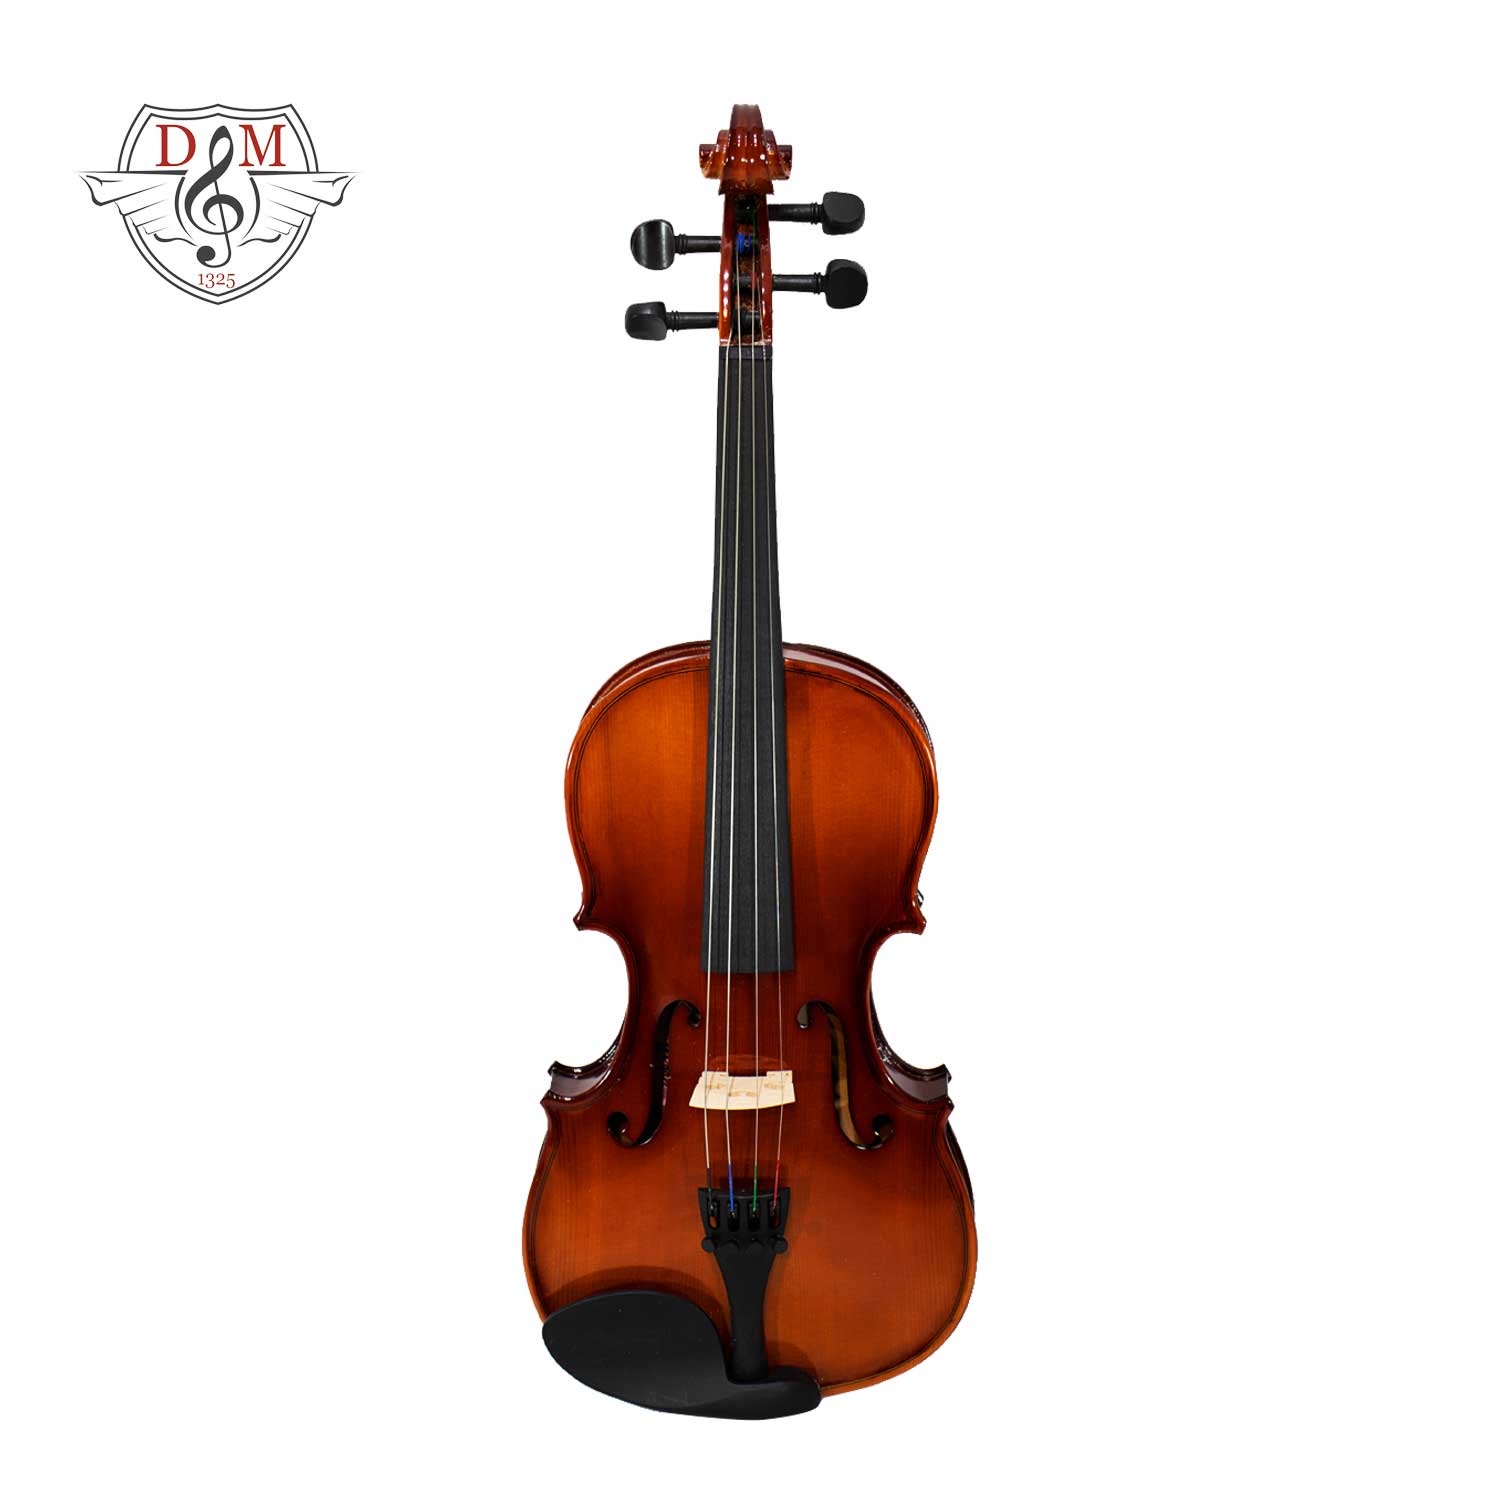 violinTF34 1